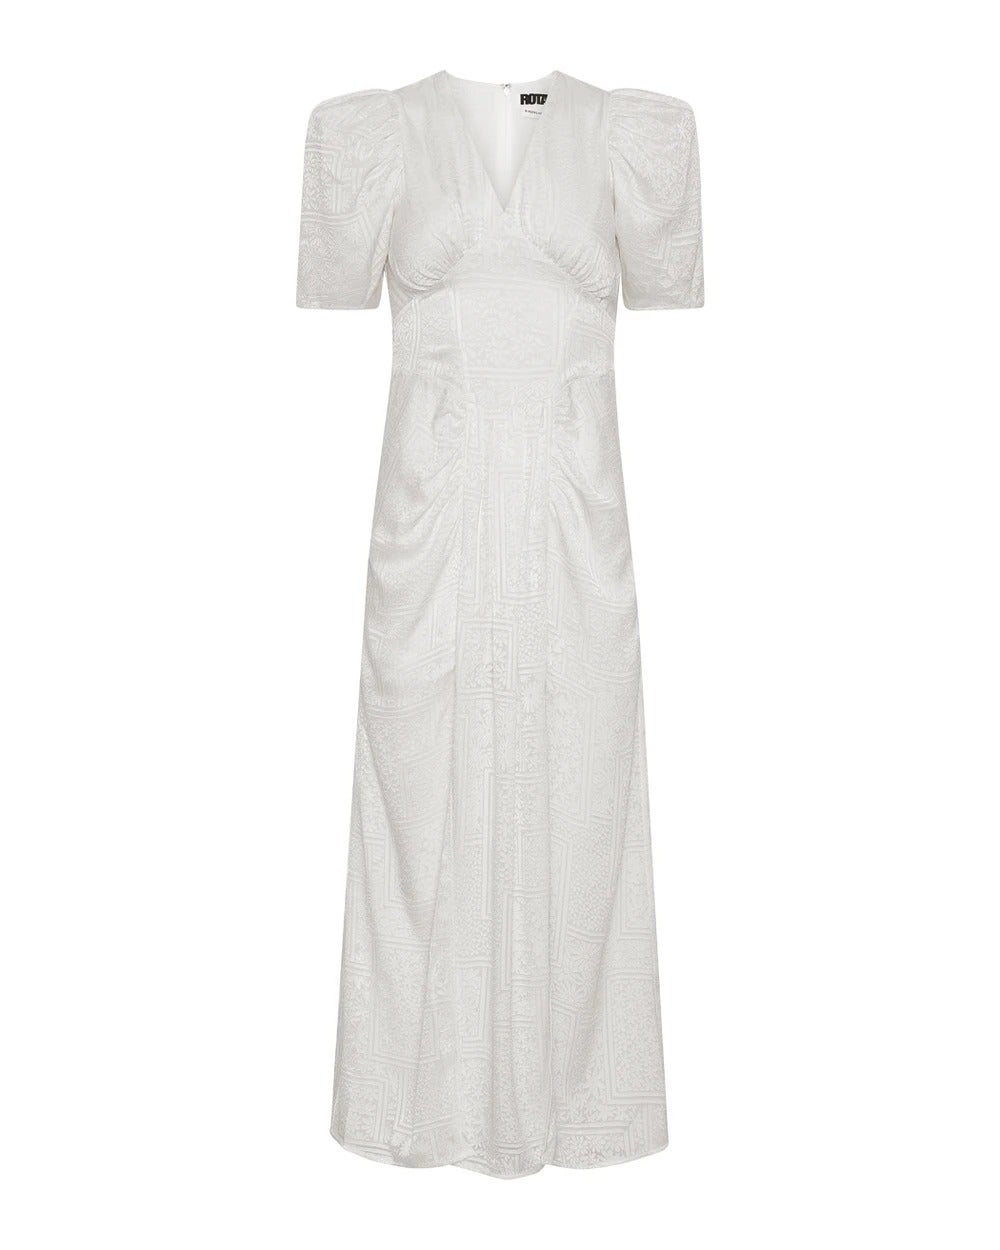 Rotate Birger Christensen + Long Alma Dress in White